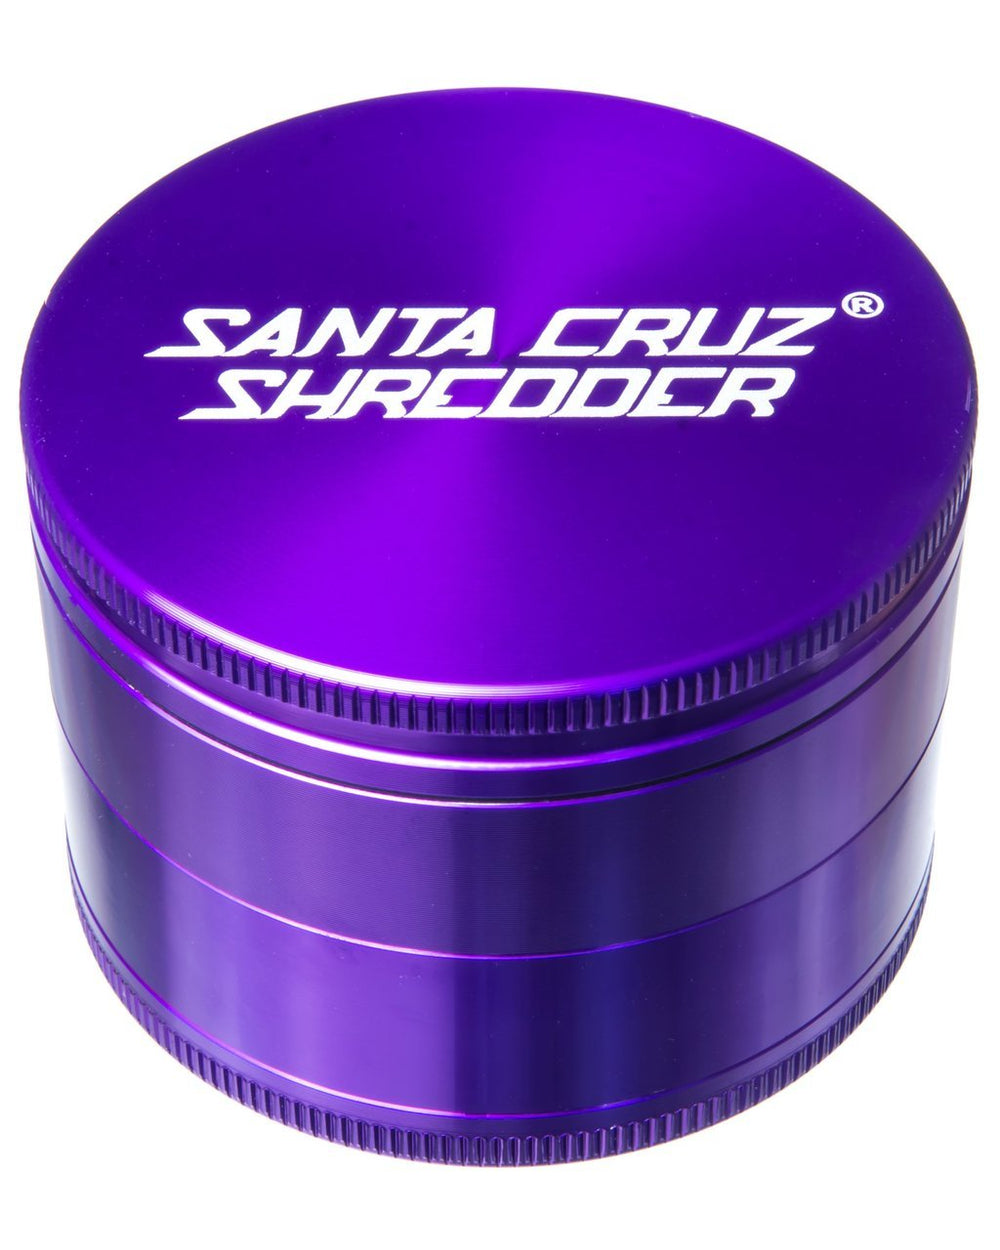 grinders Santa Cruz Shredder - Large 4 Piece Herb Grinder